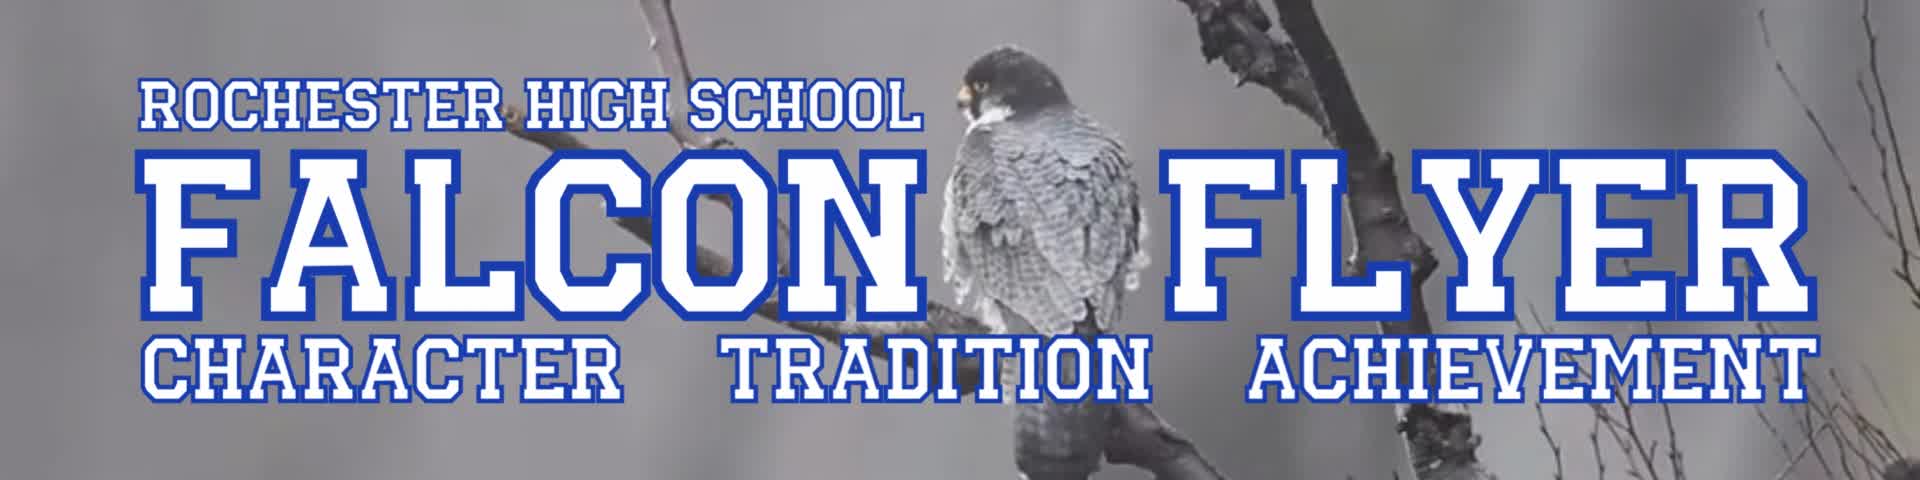 Newsletter - Falcon Flyer - Rochester High School